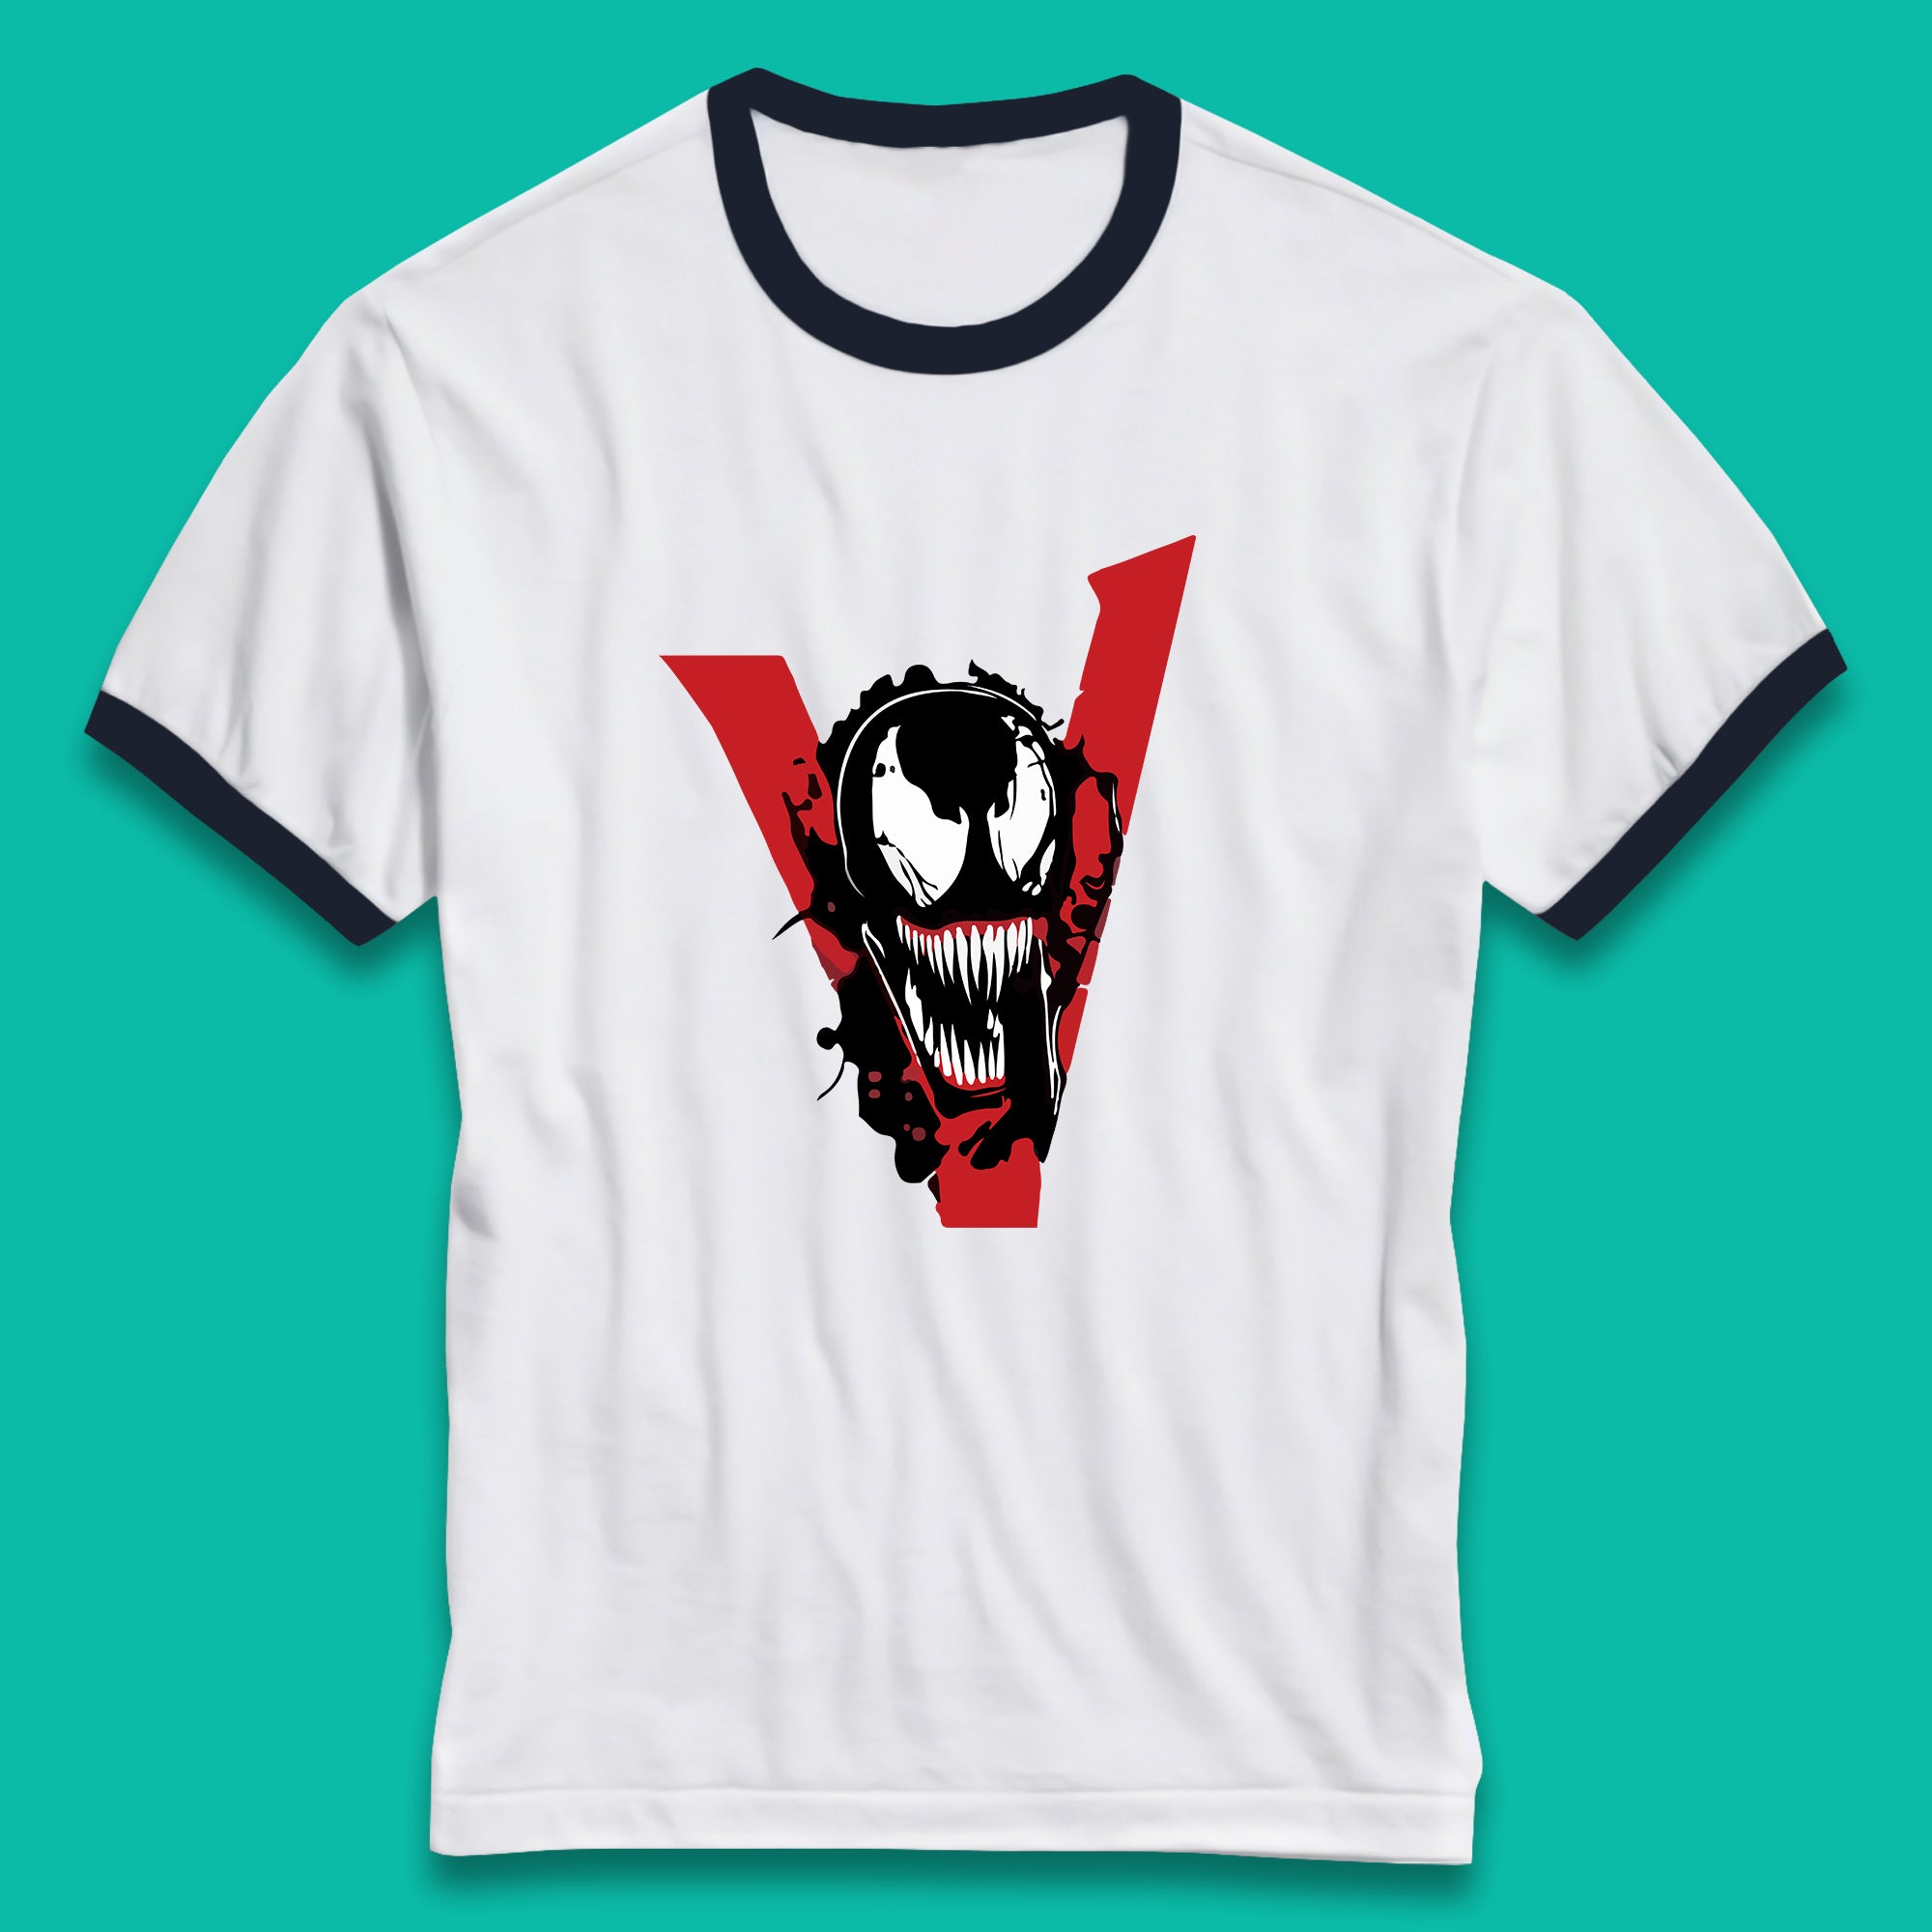 Marvel Venom Face Side View Tongue Out Marvel Avengers Superheros Movie Character Ringer T Shirt